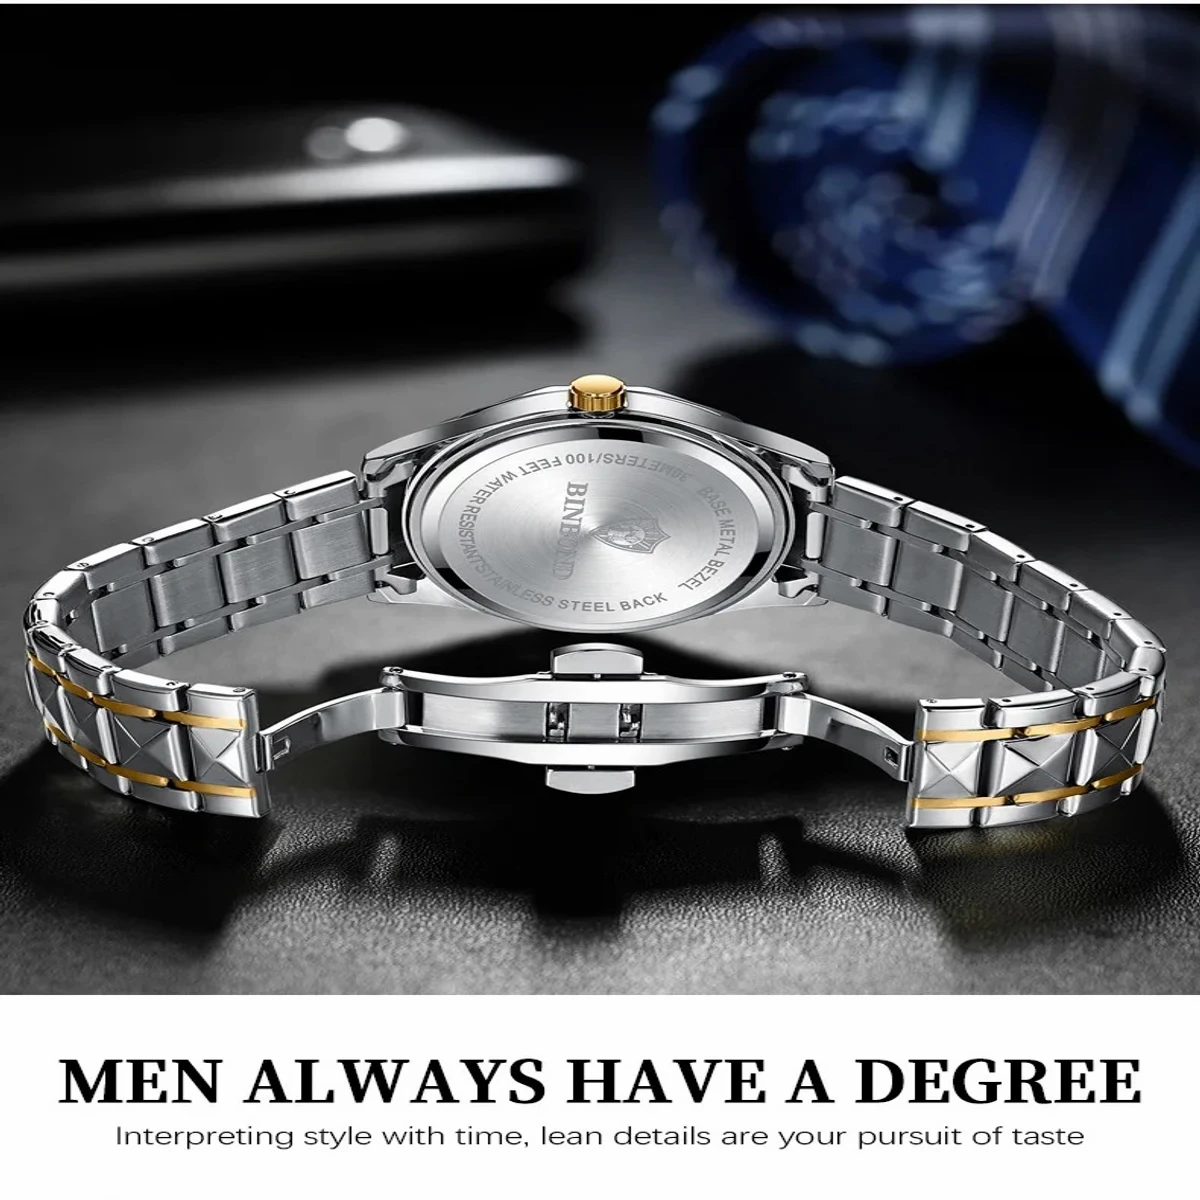 Luxury Binbond authentic men's watch waterproof night light dual calendar watch men's quartz watch diamond ceiling glass- Black